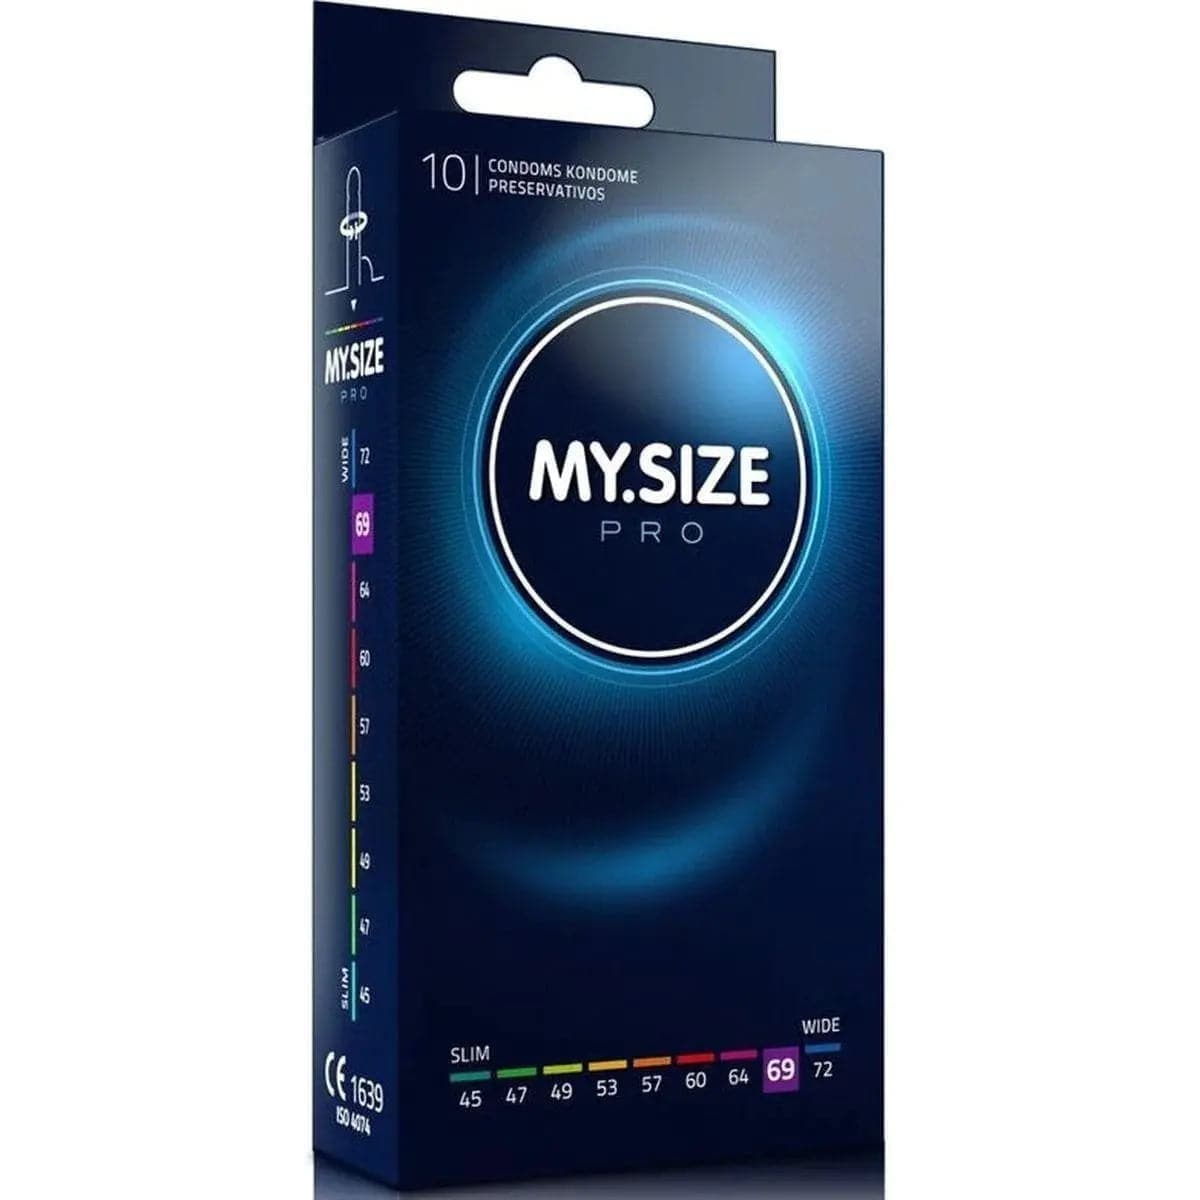 Preservativos XXL - My.Size 69mm  My.Size 10 preservativos  